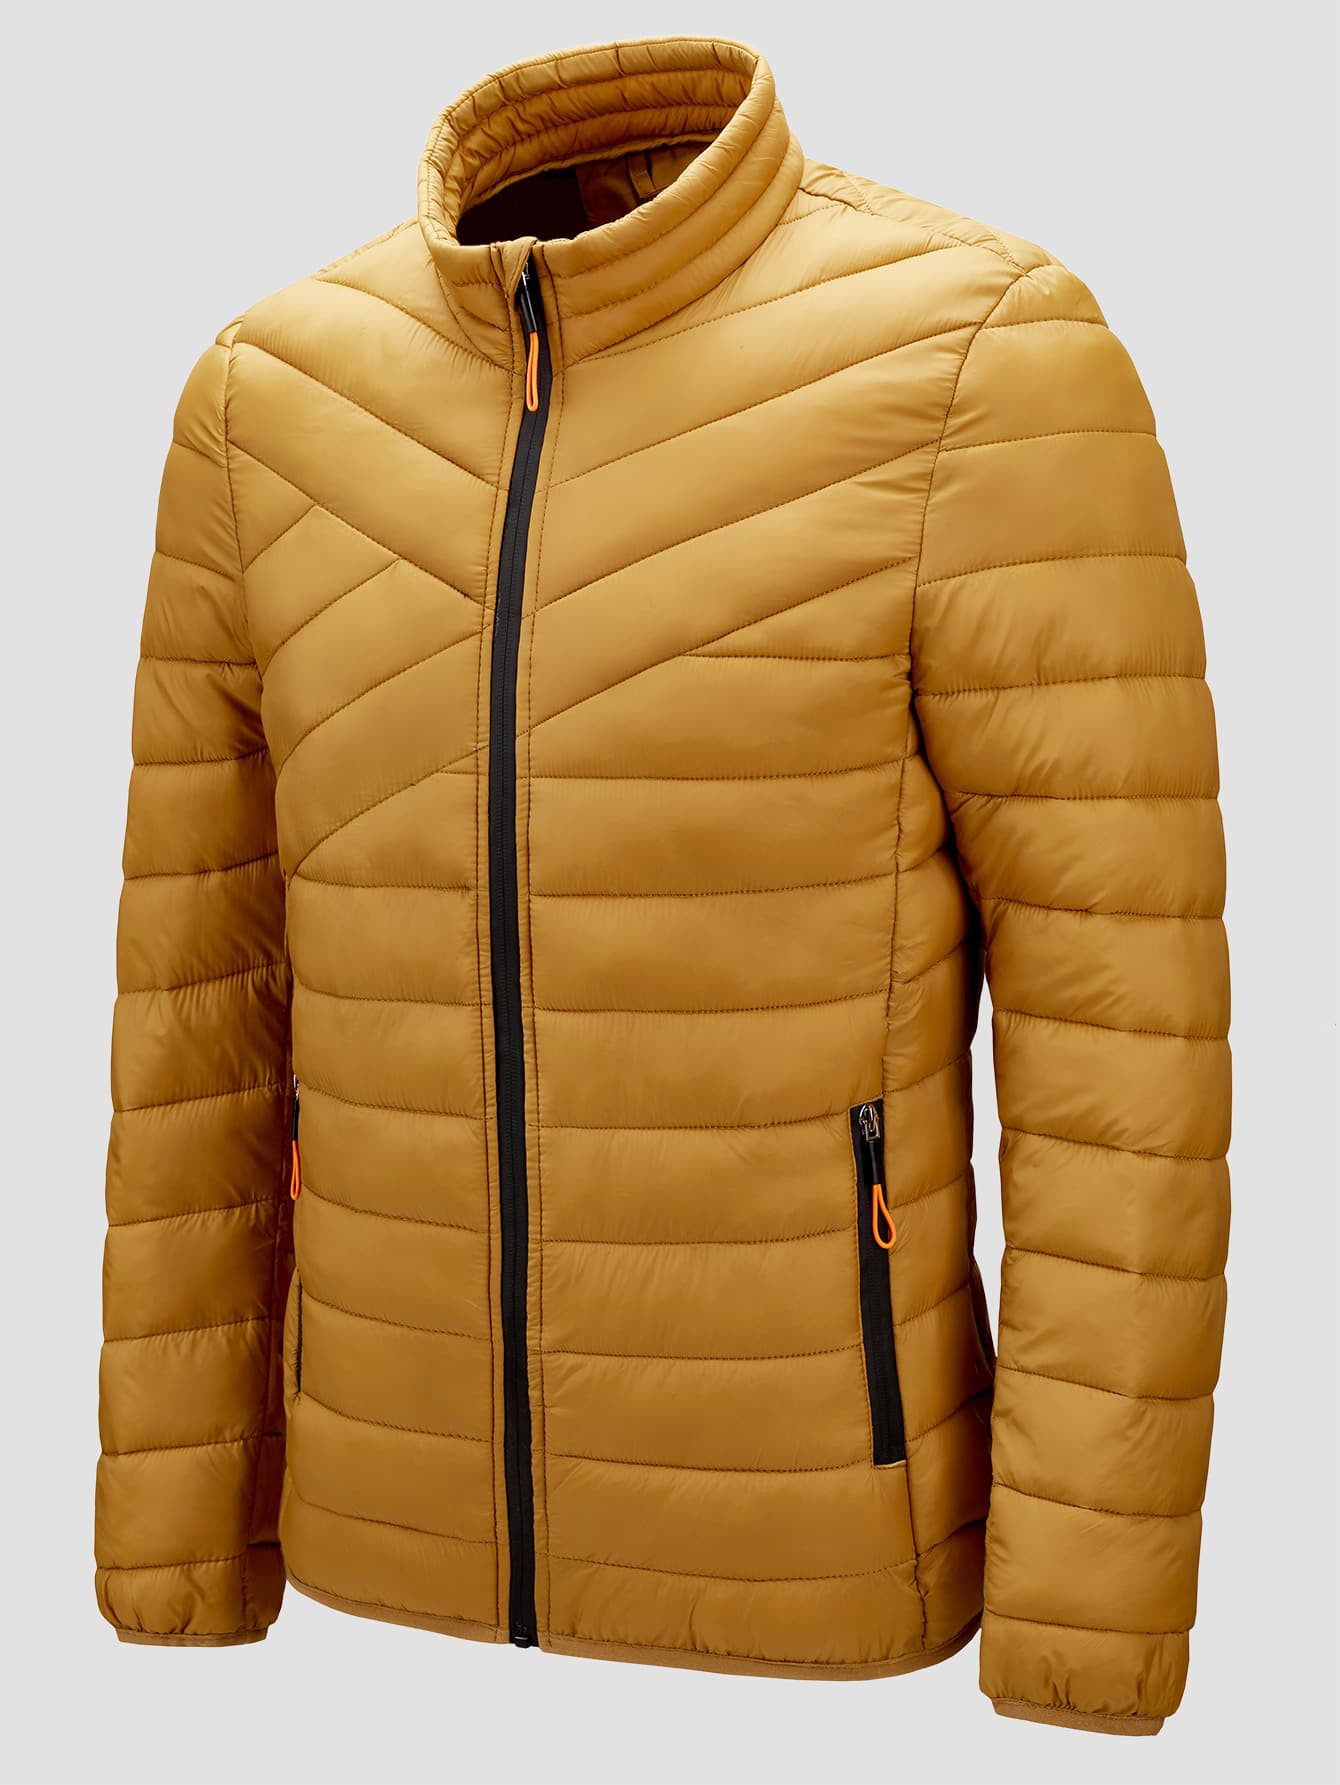 MoFiz Mens Down Jacket Hooded Snow Winter Coat Packable